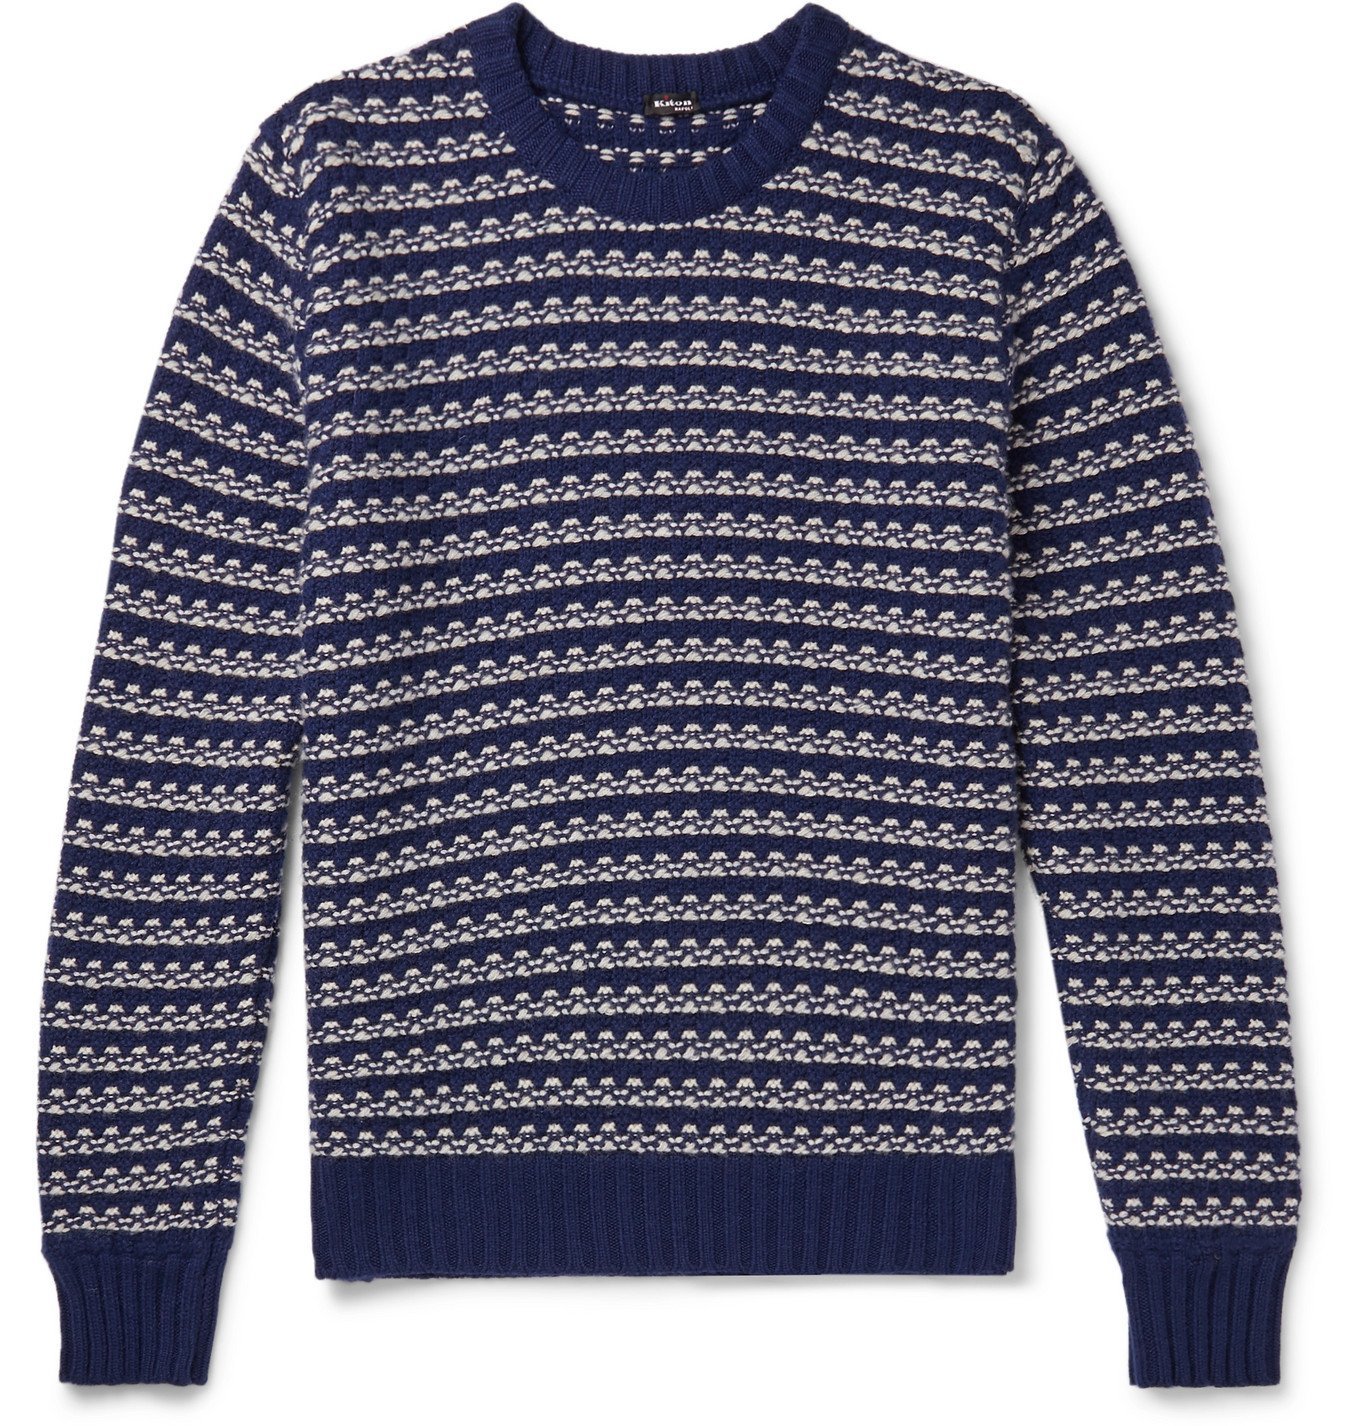 Kiton - Cashmere Sweater - Blue Kiton